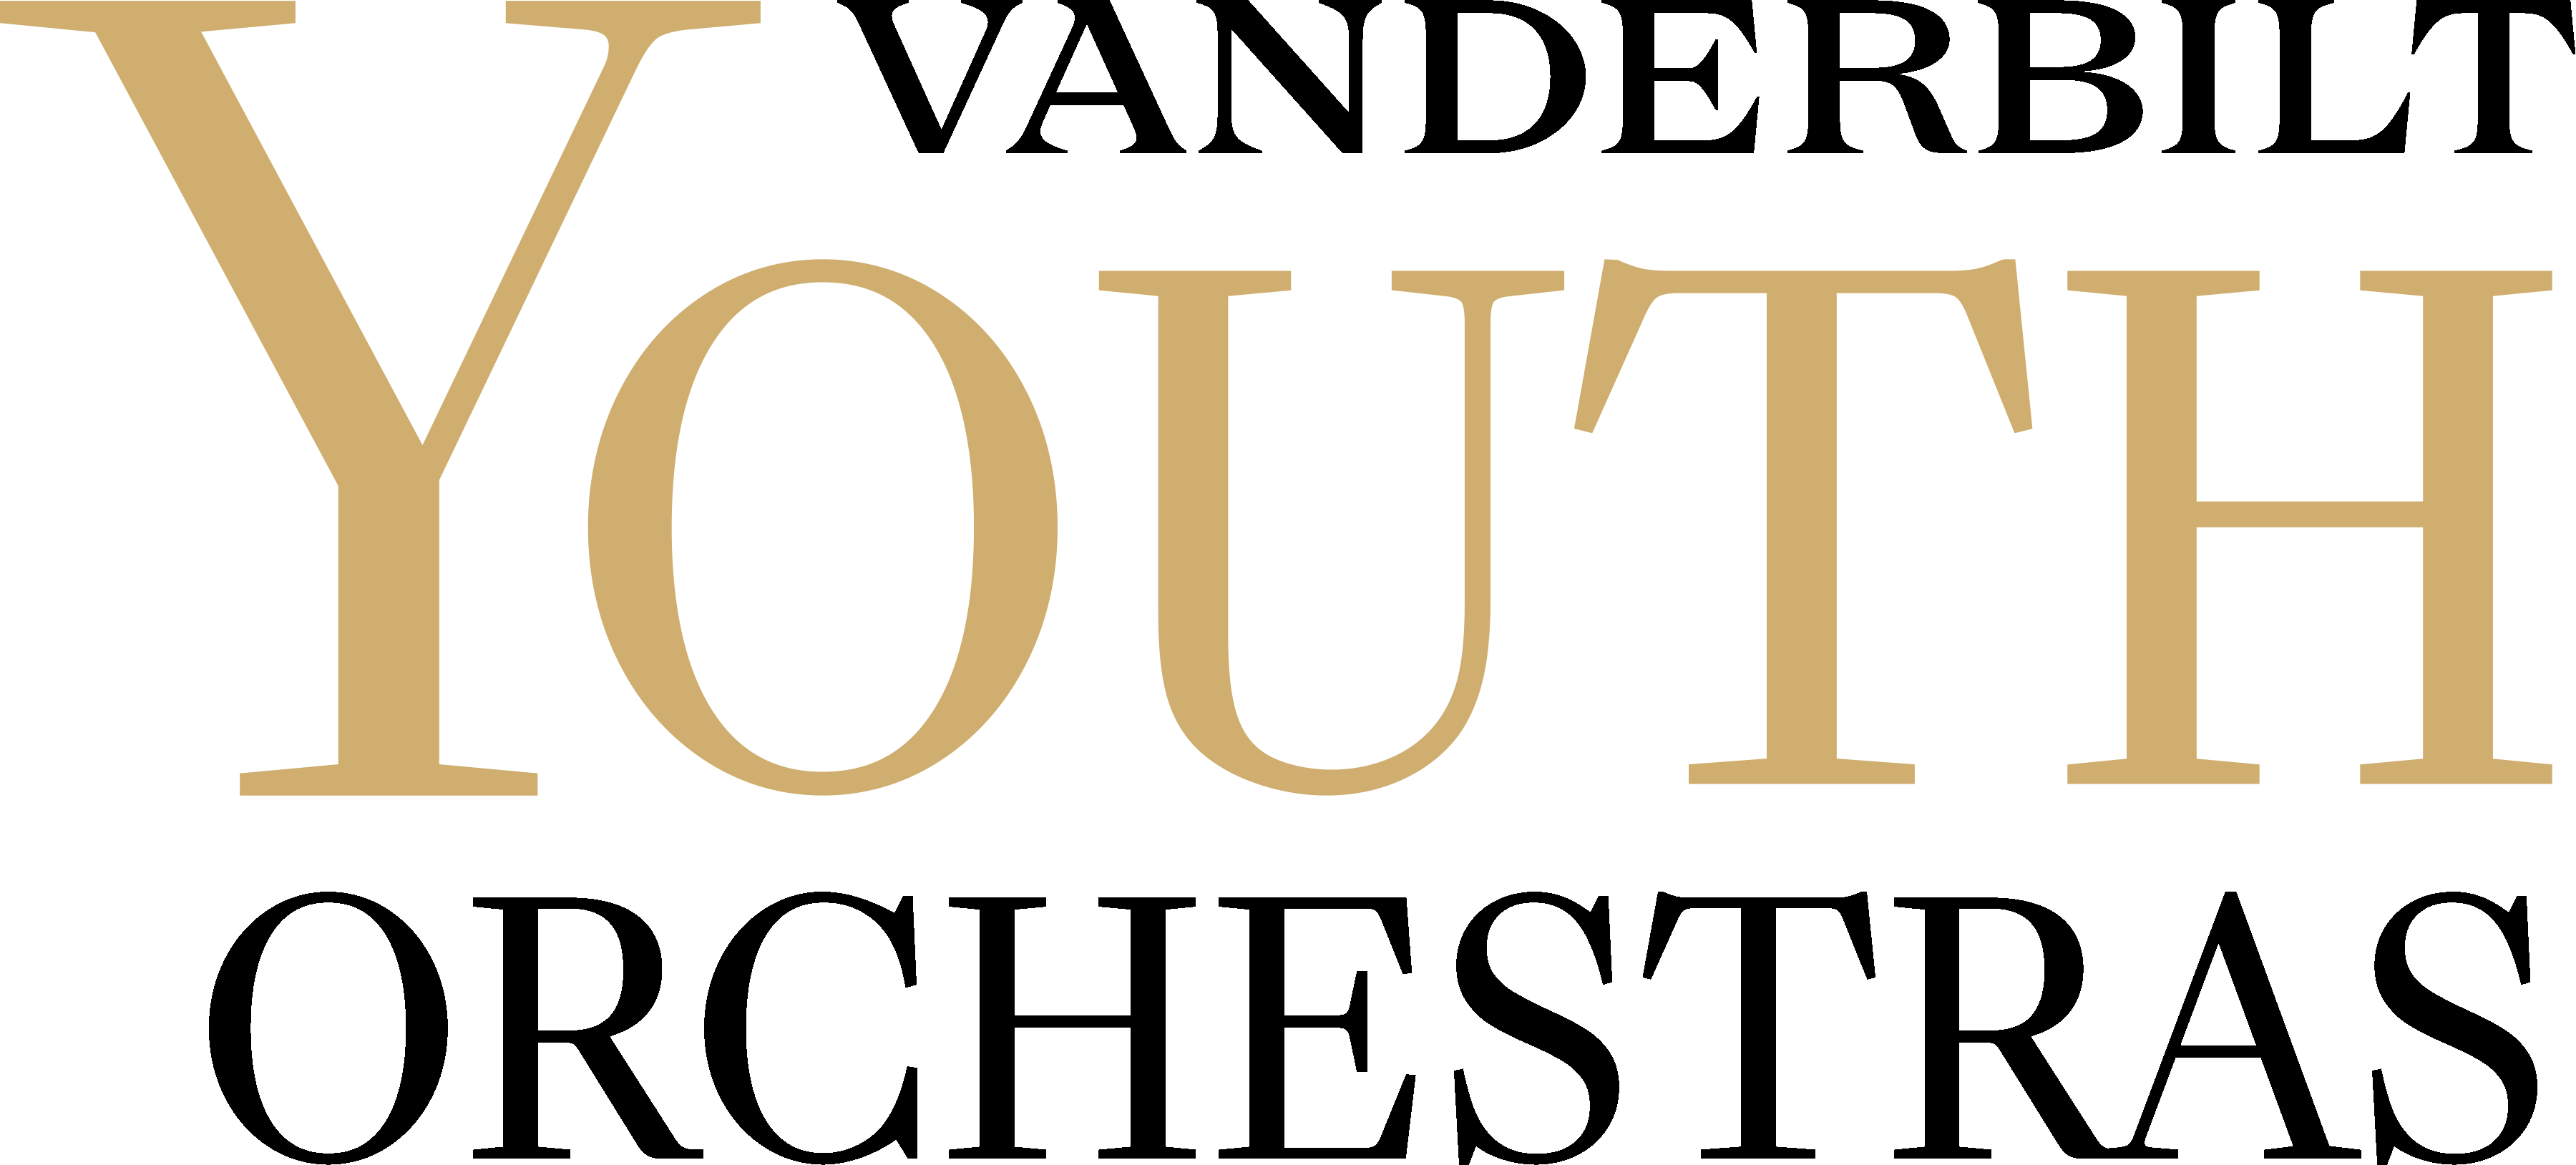 Vanderbilt Youth Orchestras